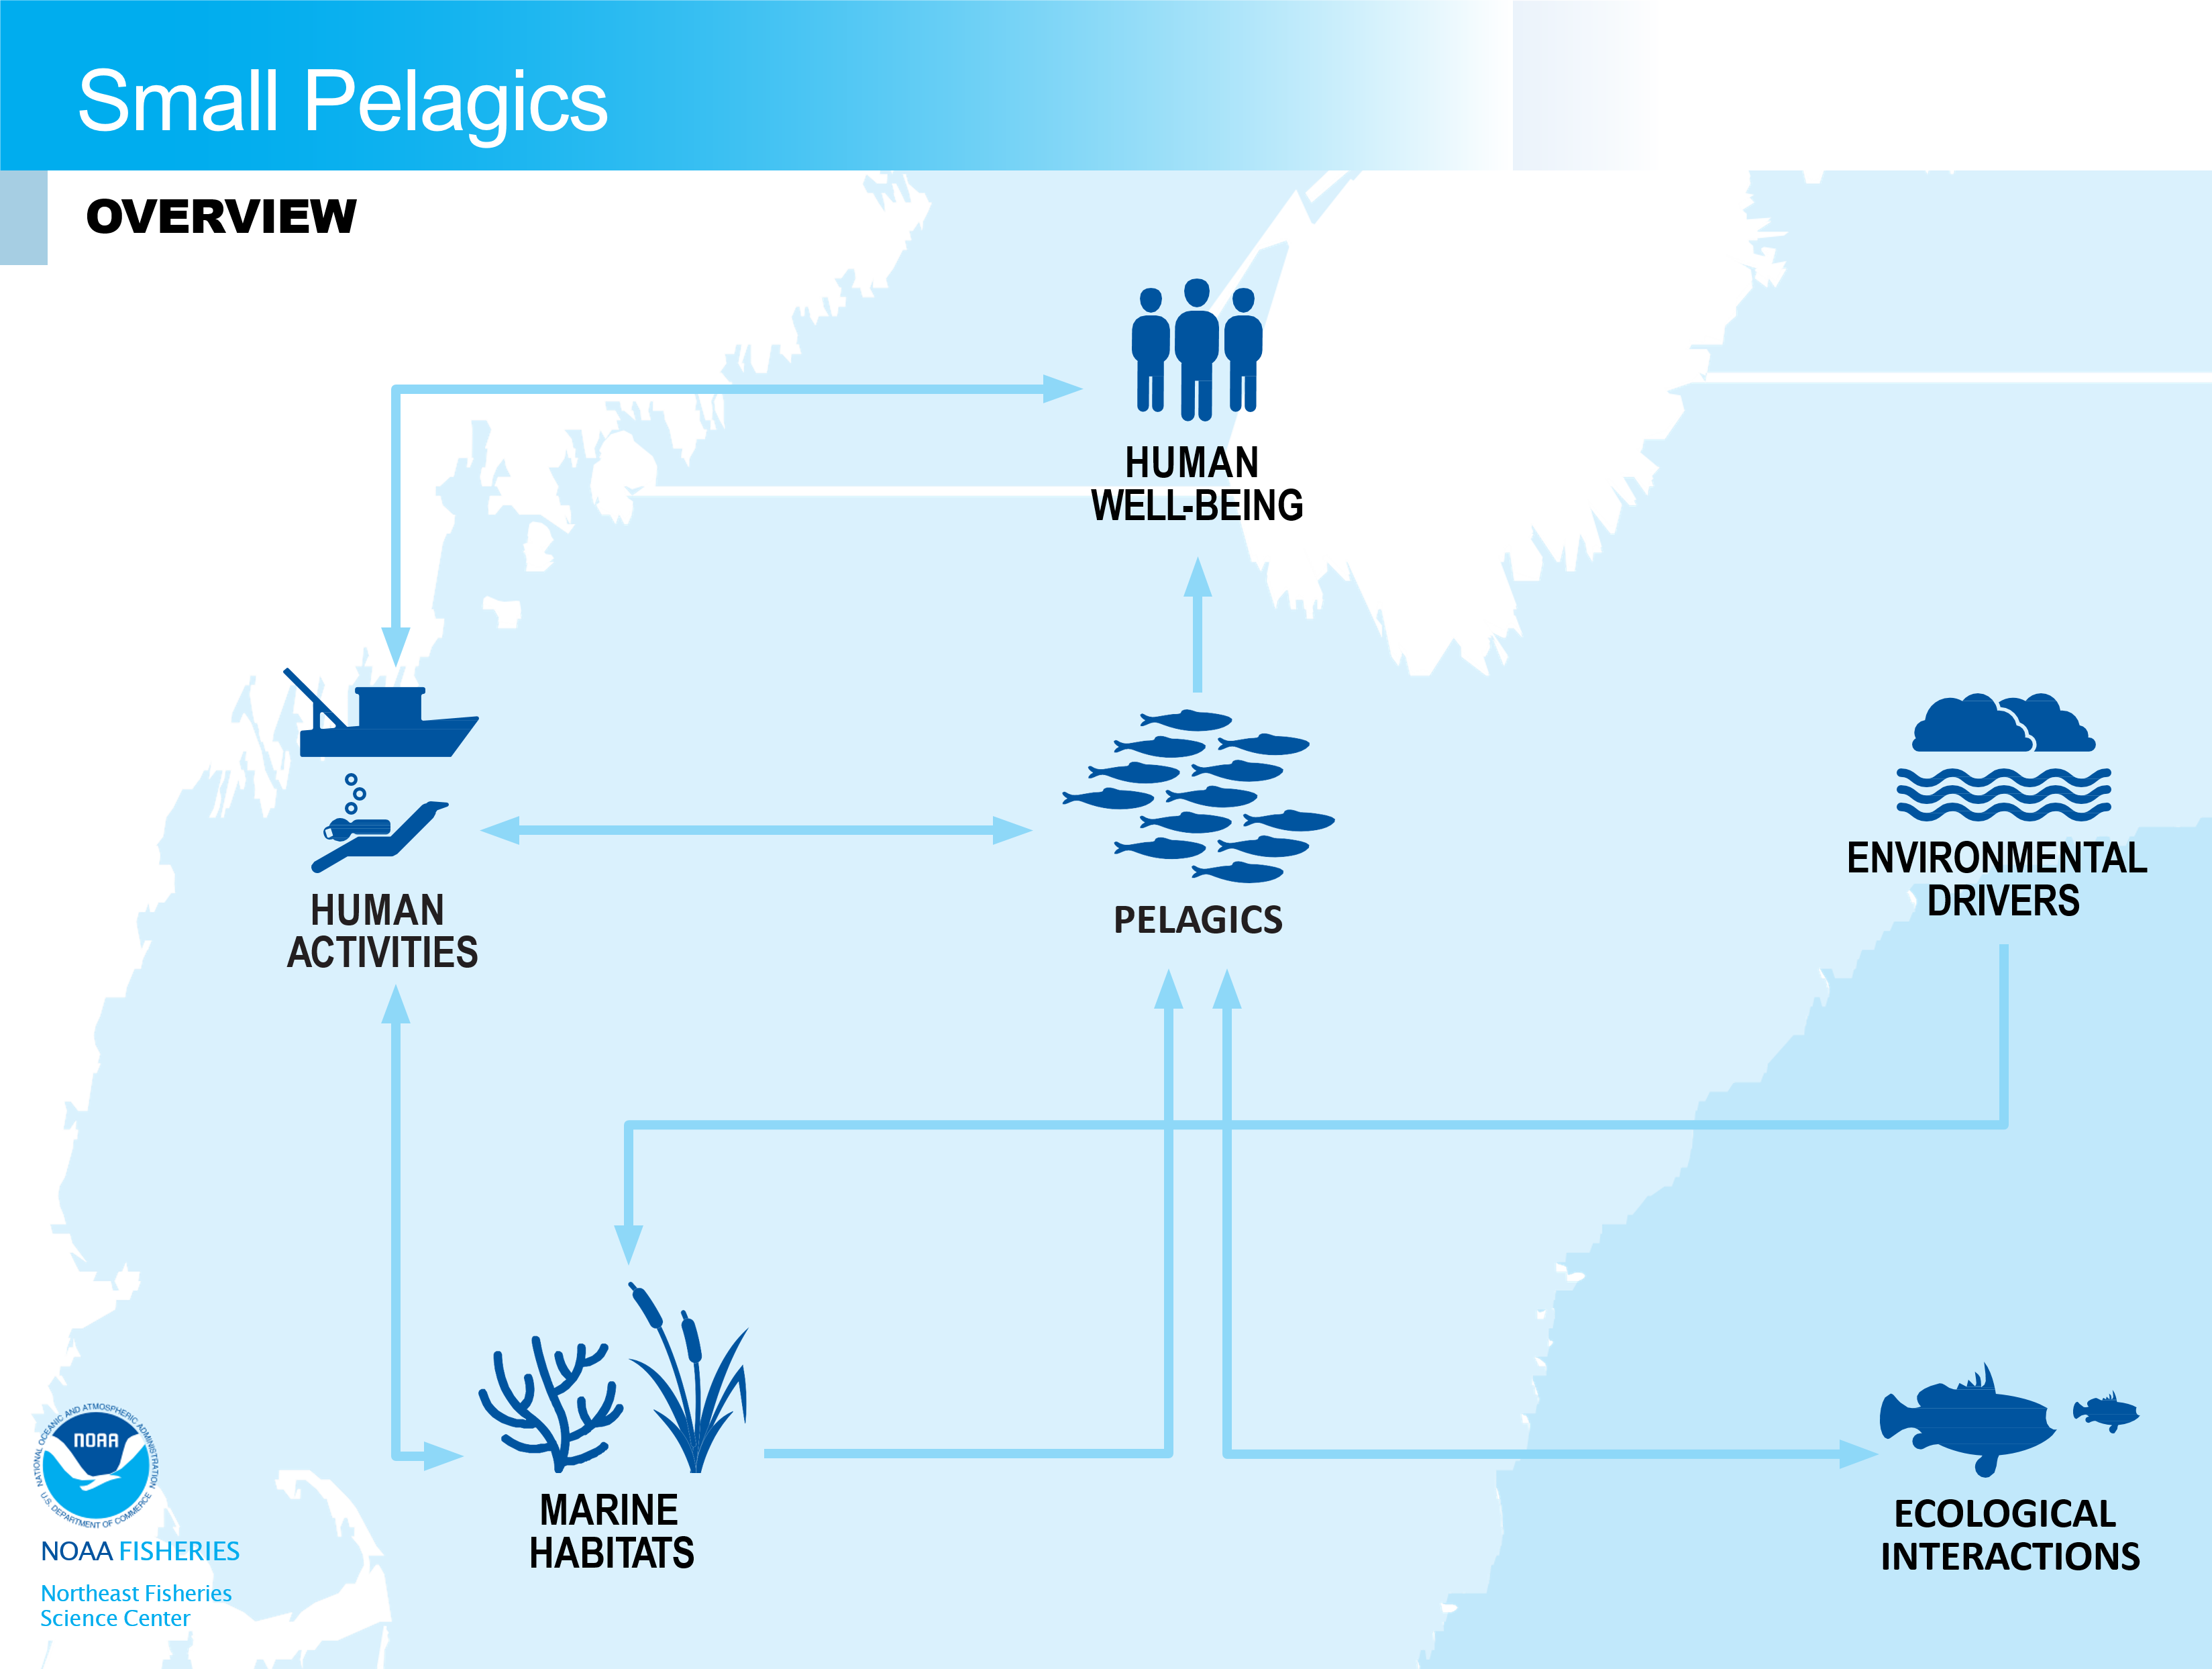 Conceptual model overview of small pelagics in the NE-LME.